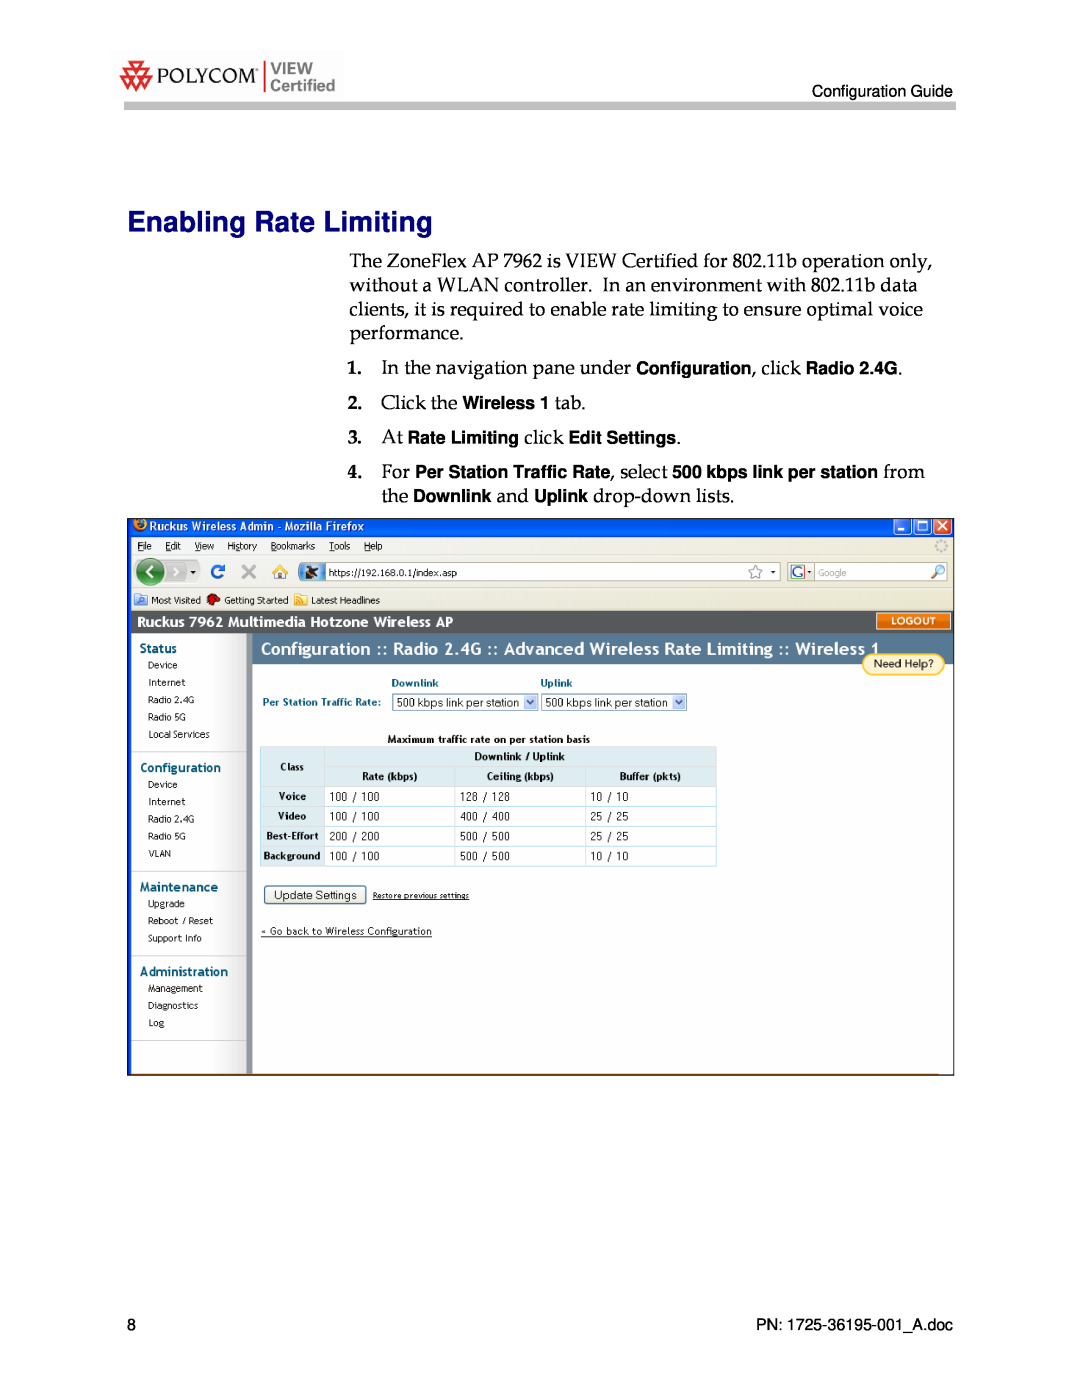 Polycom 7962 manual Enabling Rate Limiting, At Rate Limiting click Edit Settings 